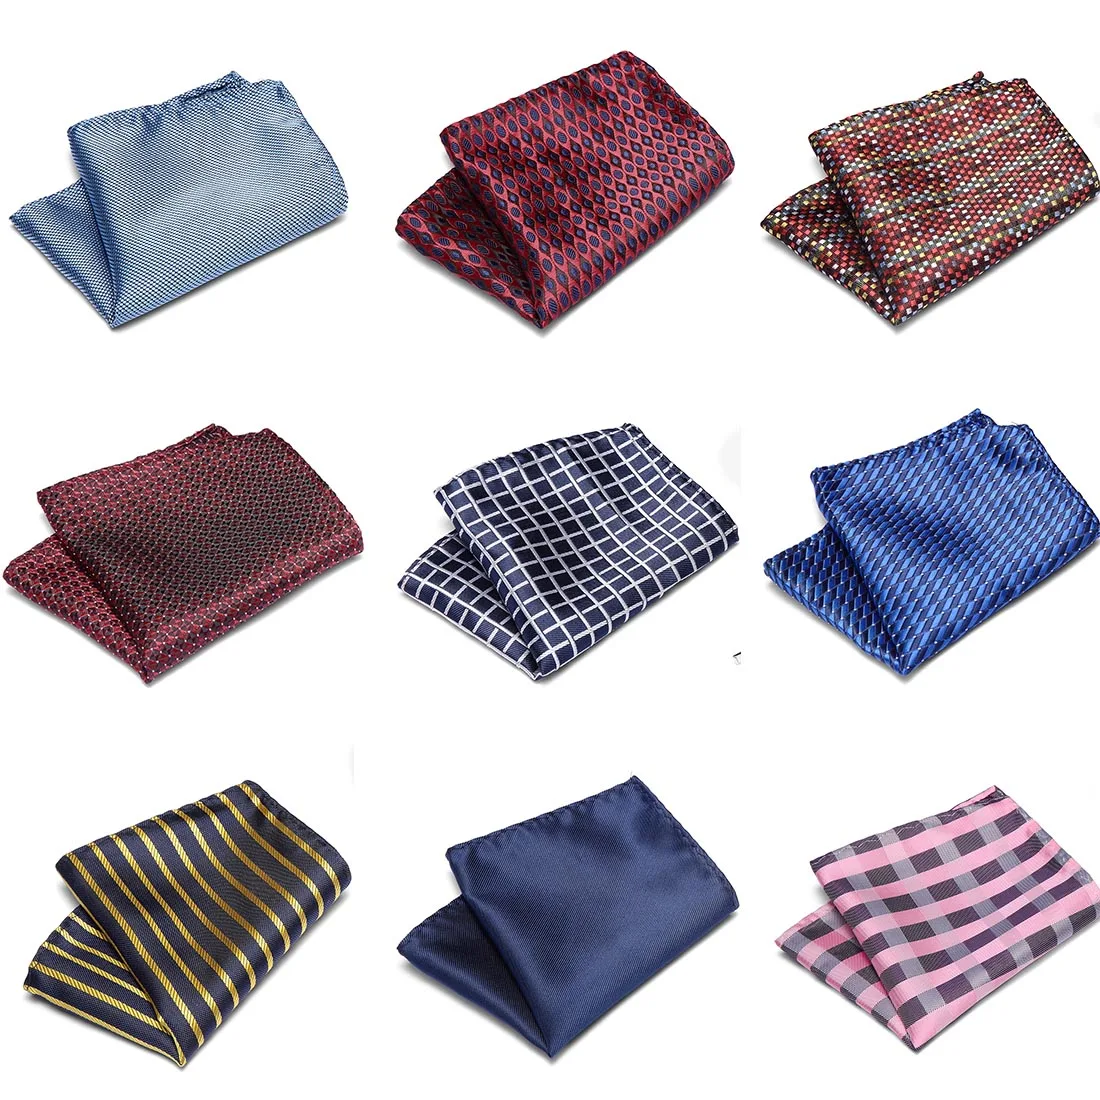 

Men Wedding Pocket Square 100%Silk match for Suit Tie Men's Handkerchief Accessories Jacquard Solid Dots Stripes Pattern 22*22cm